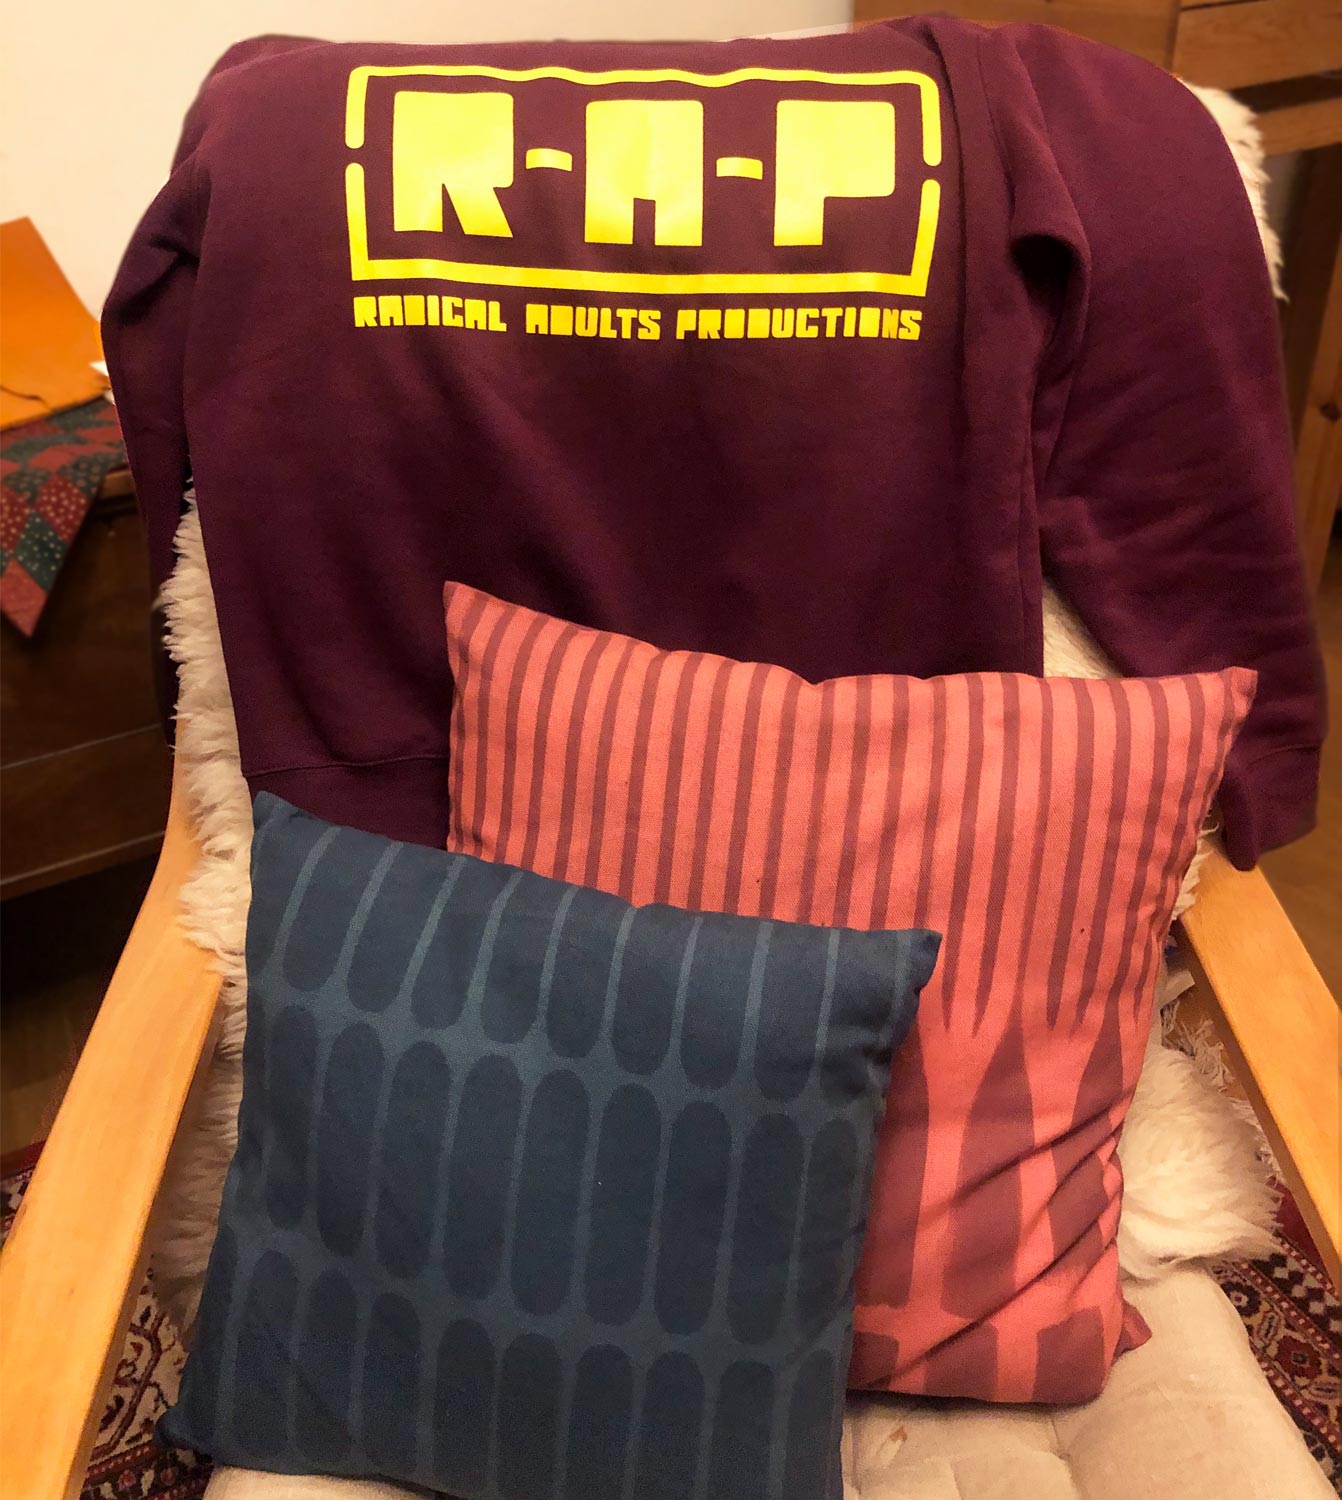 R/A/P Pillows 2020 PILLOW CASES